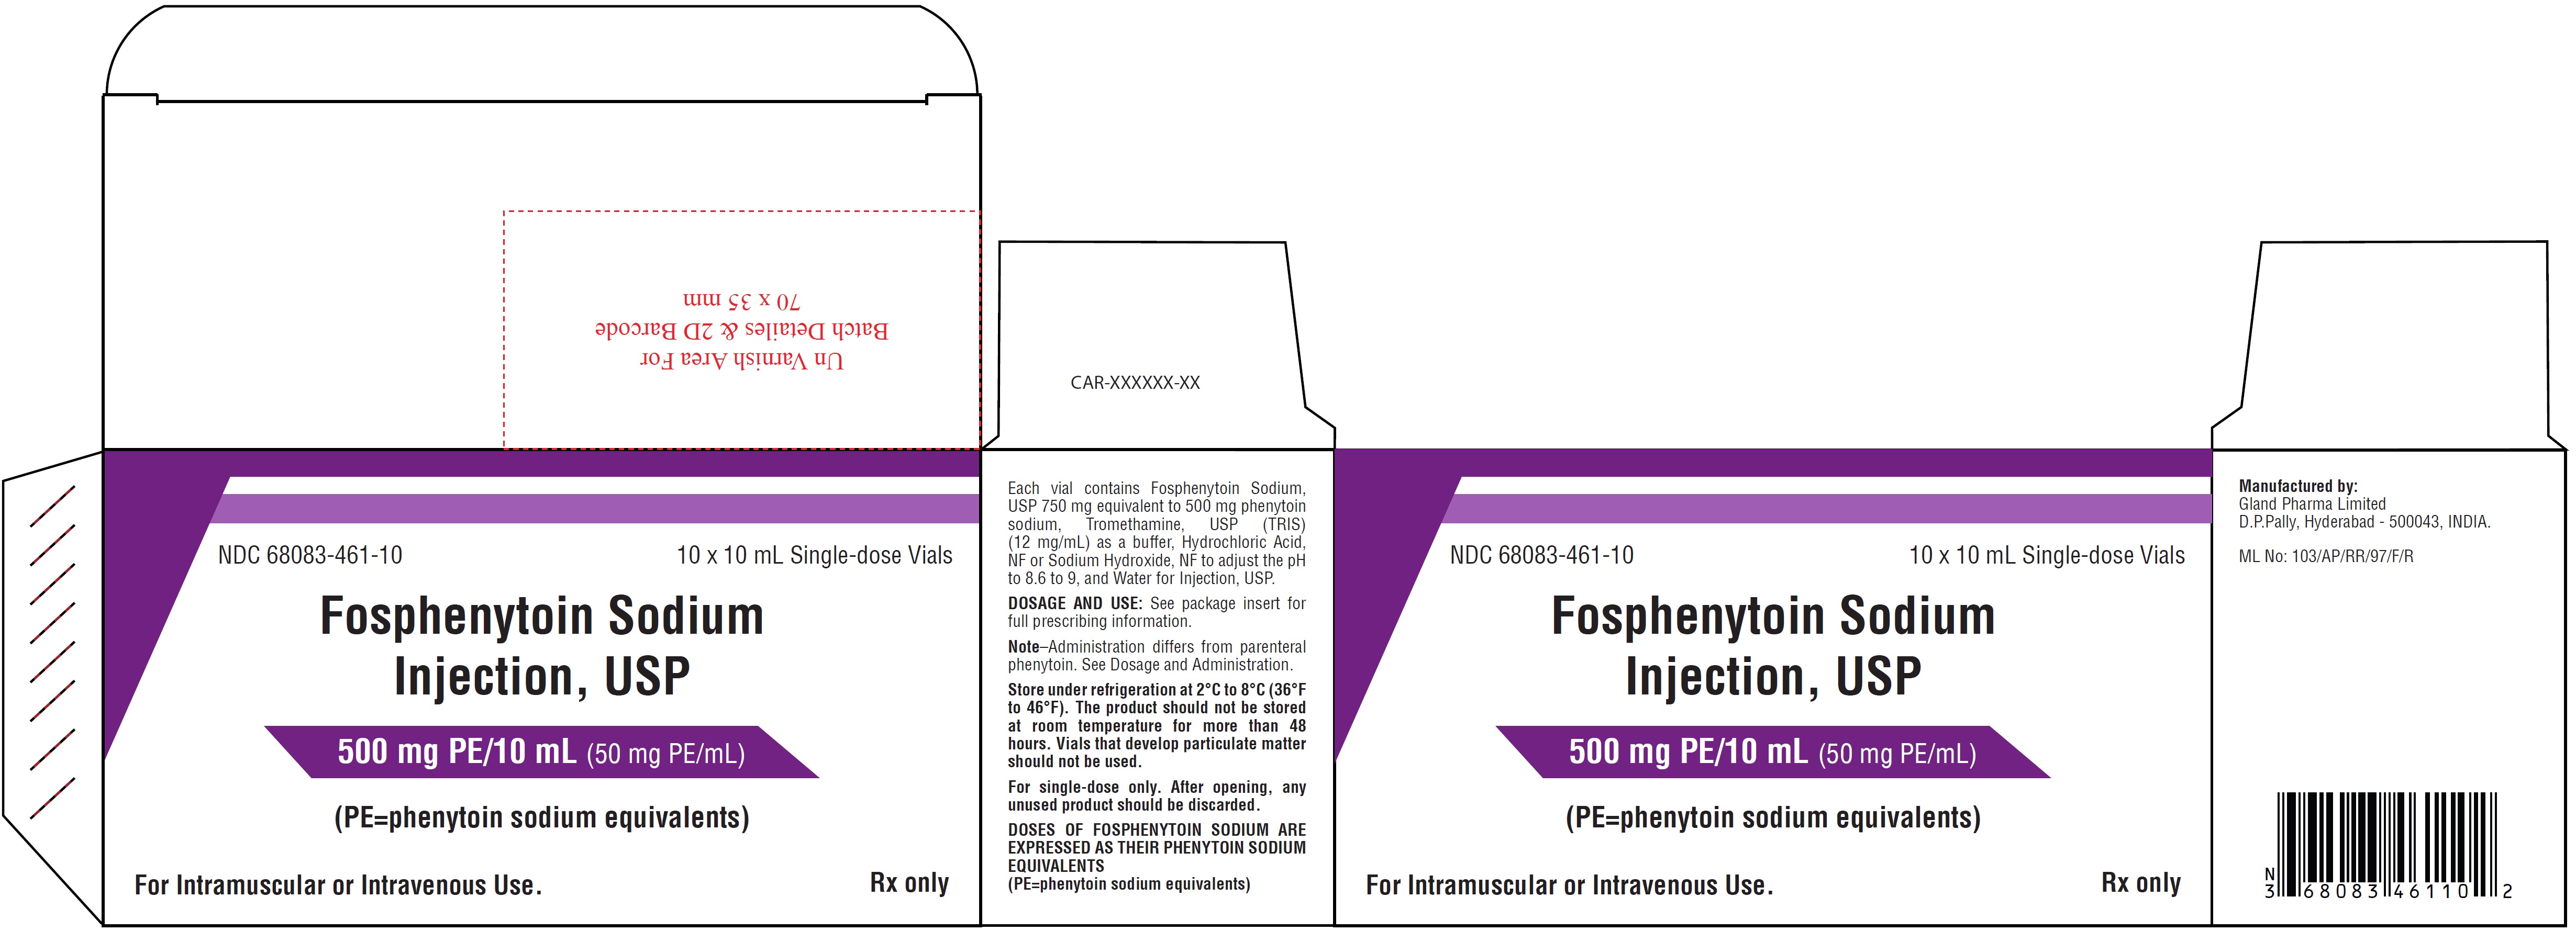 fosphenytoin-sodium-carton-10ml